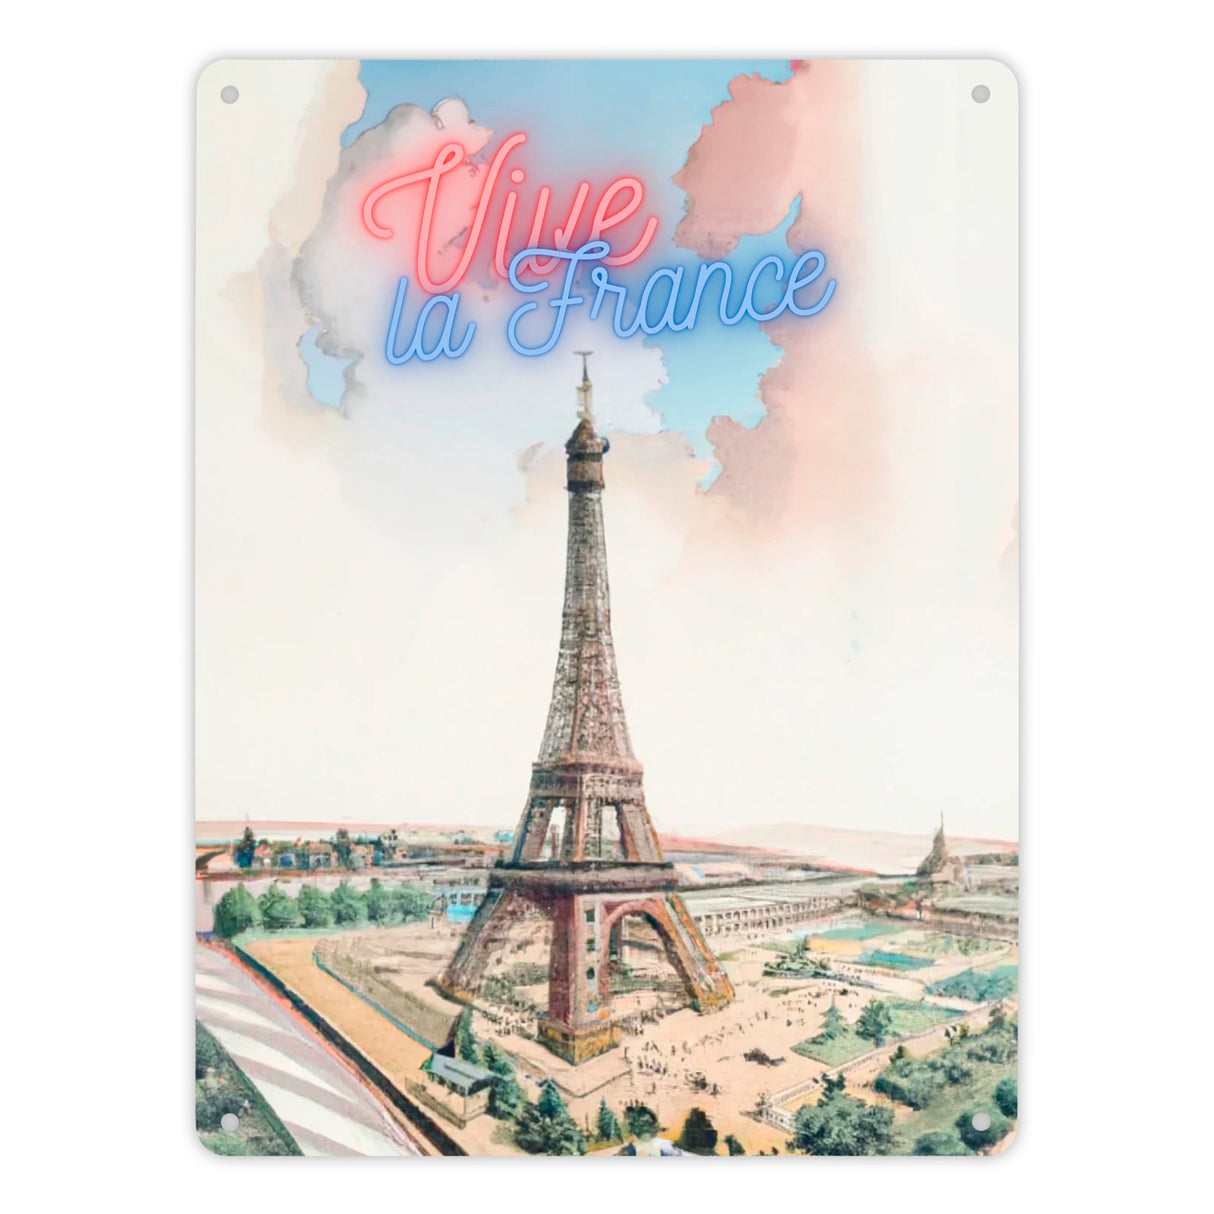 Vive la France Eiffelturm Metallschild in 15x20 cm im retro Look zum Thema Paris